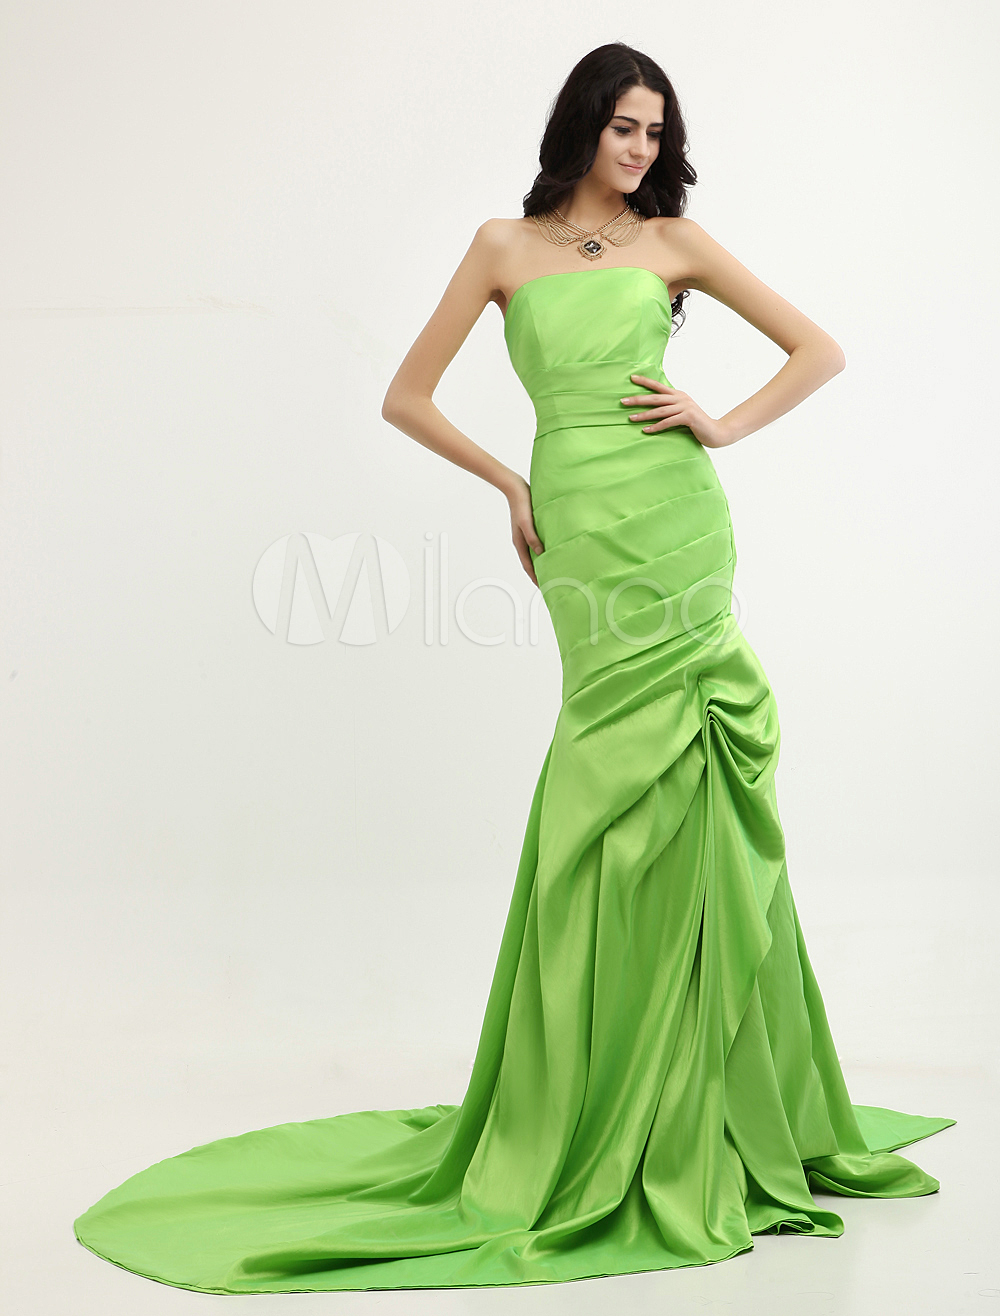 Slimming Daffodil Taffeta Strapless Women's Emmy Awards Dress - Milanoo.com